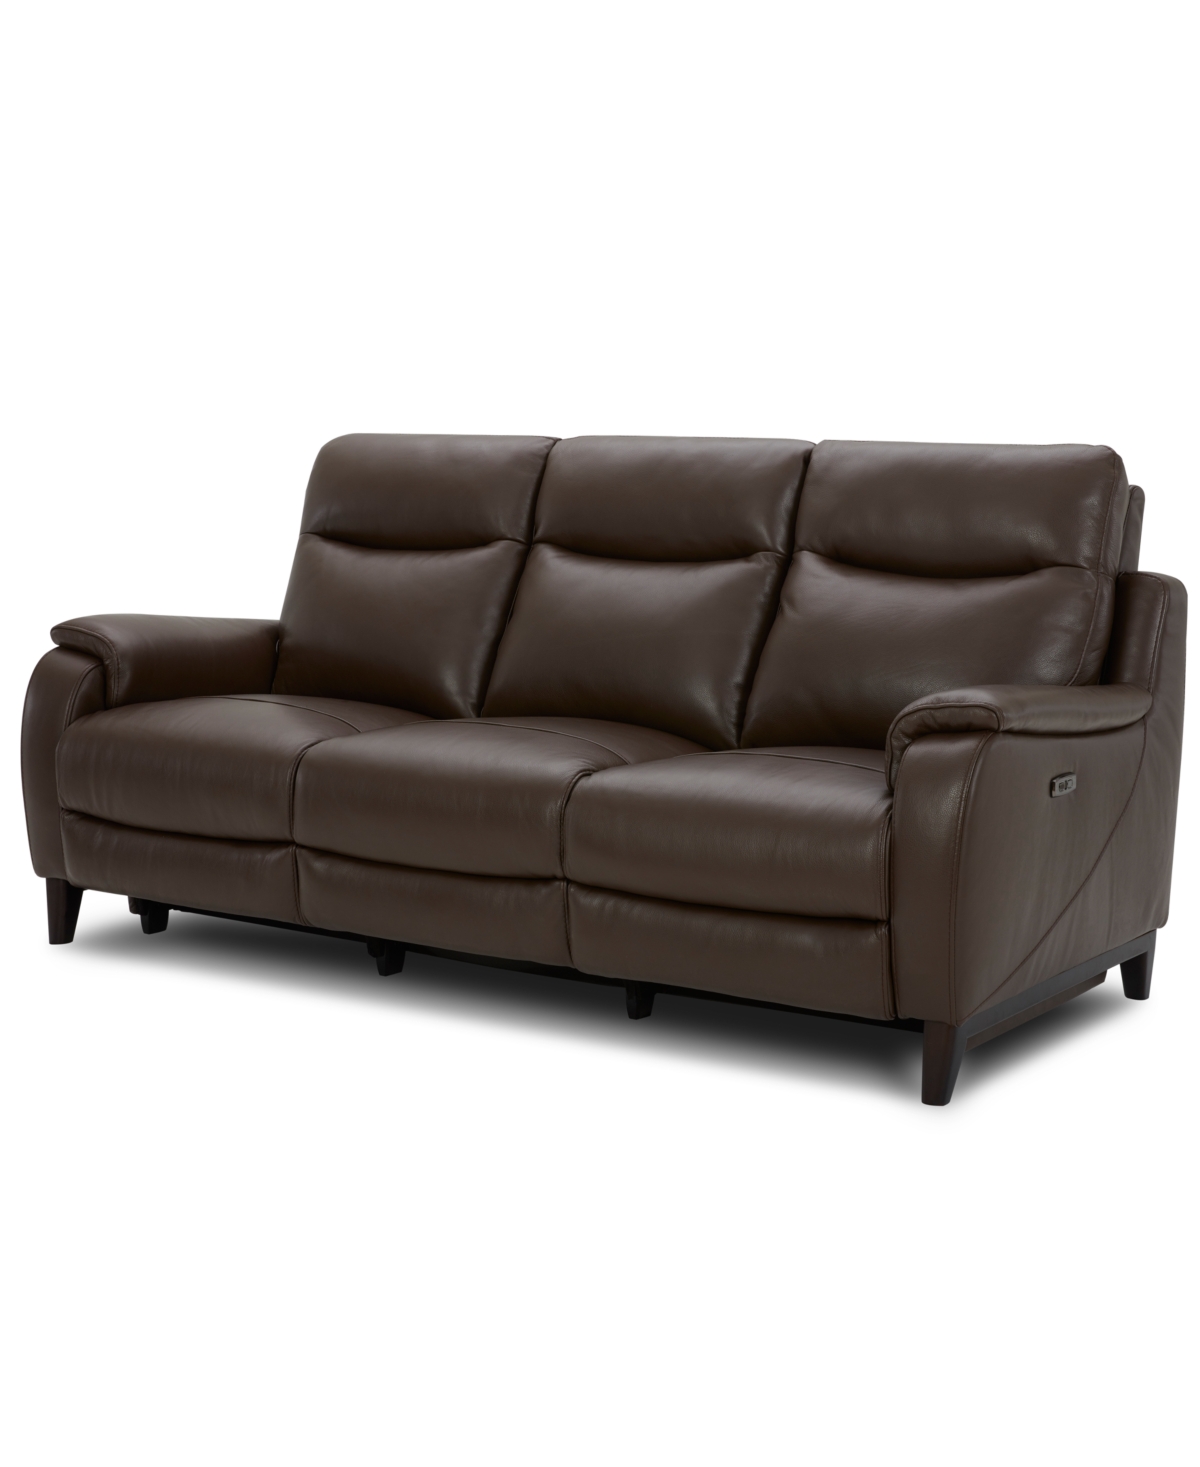 Kolson 83 Leather Power Recliner Sofa, Created for Macys